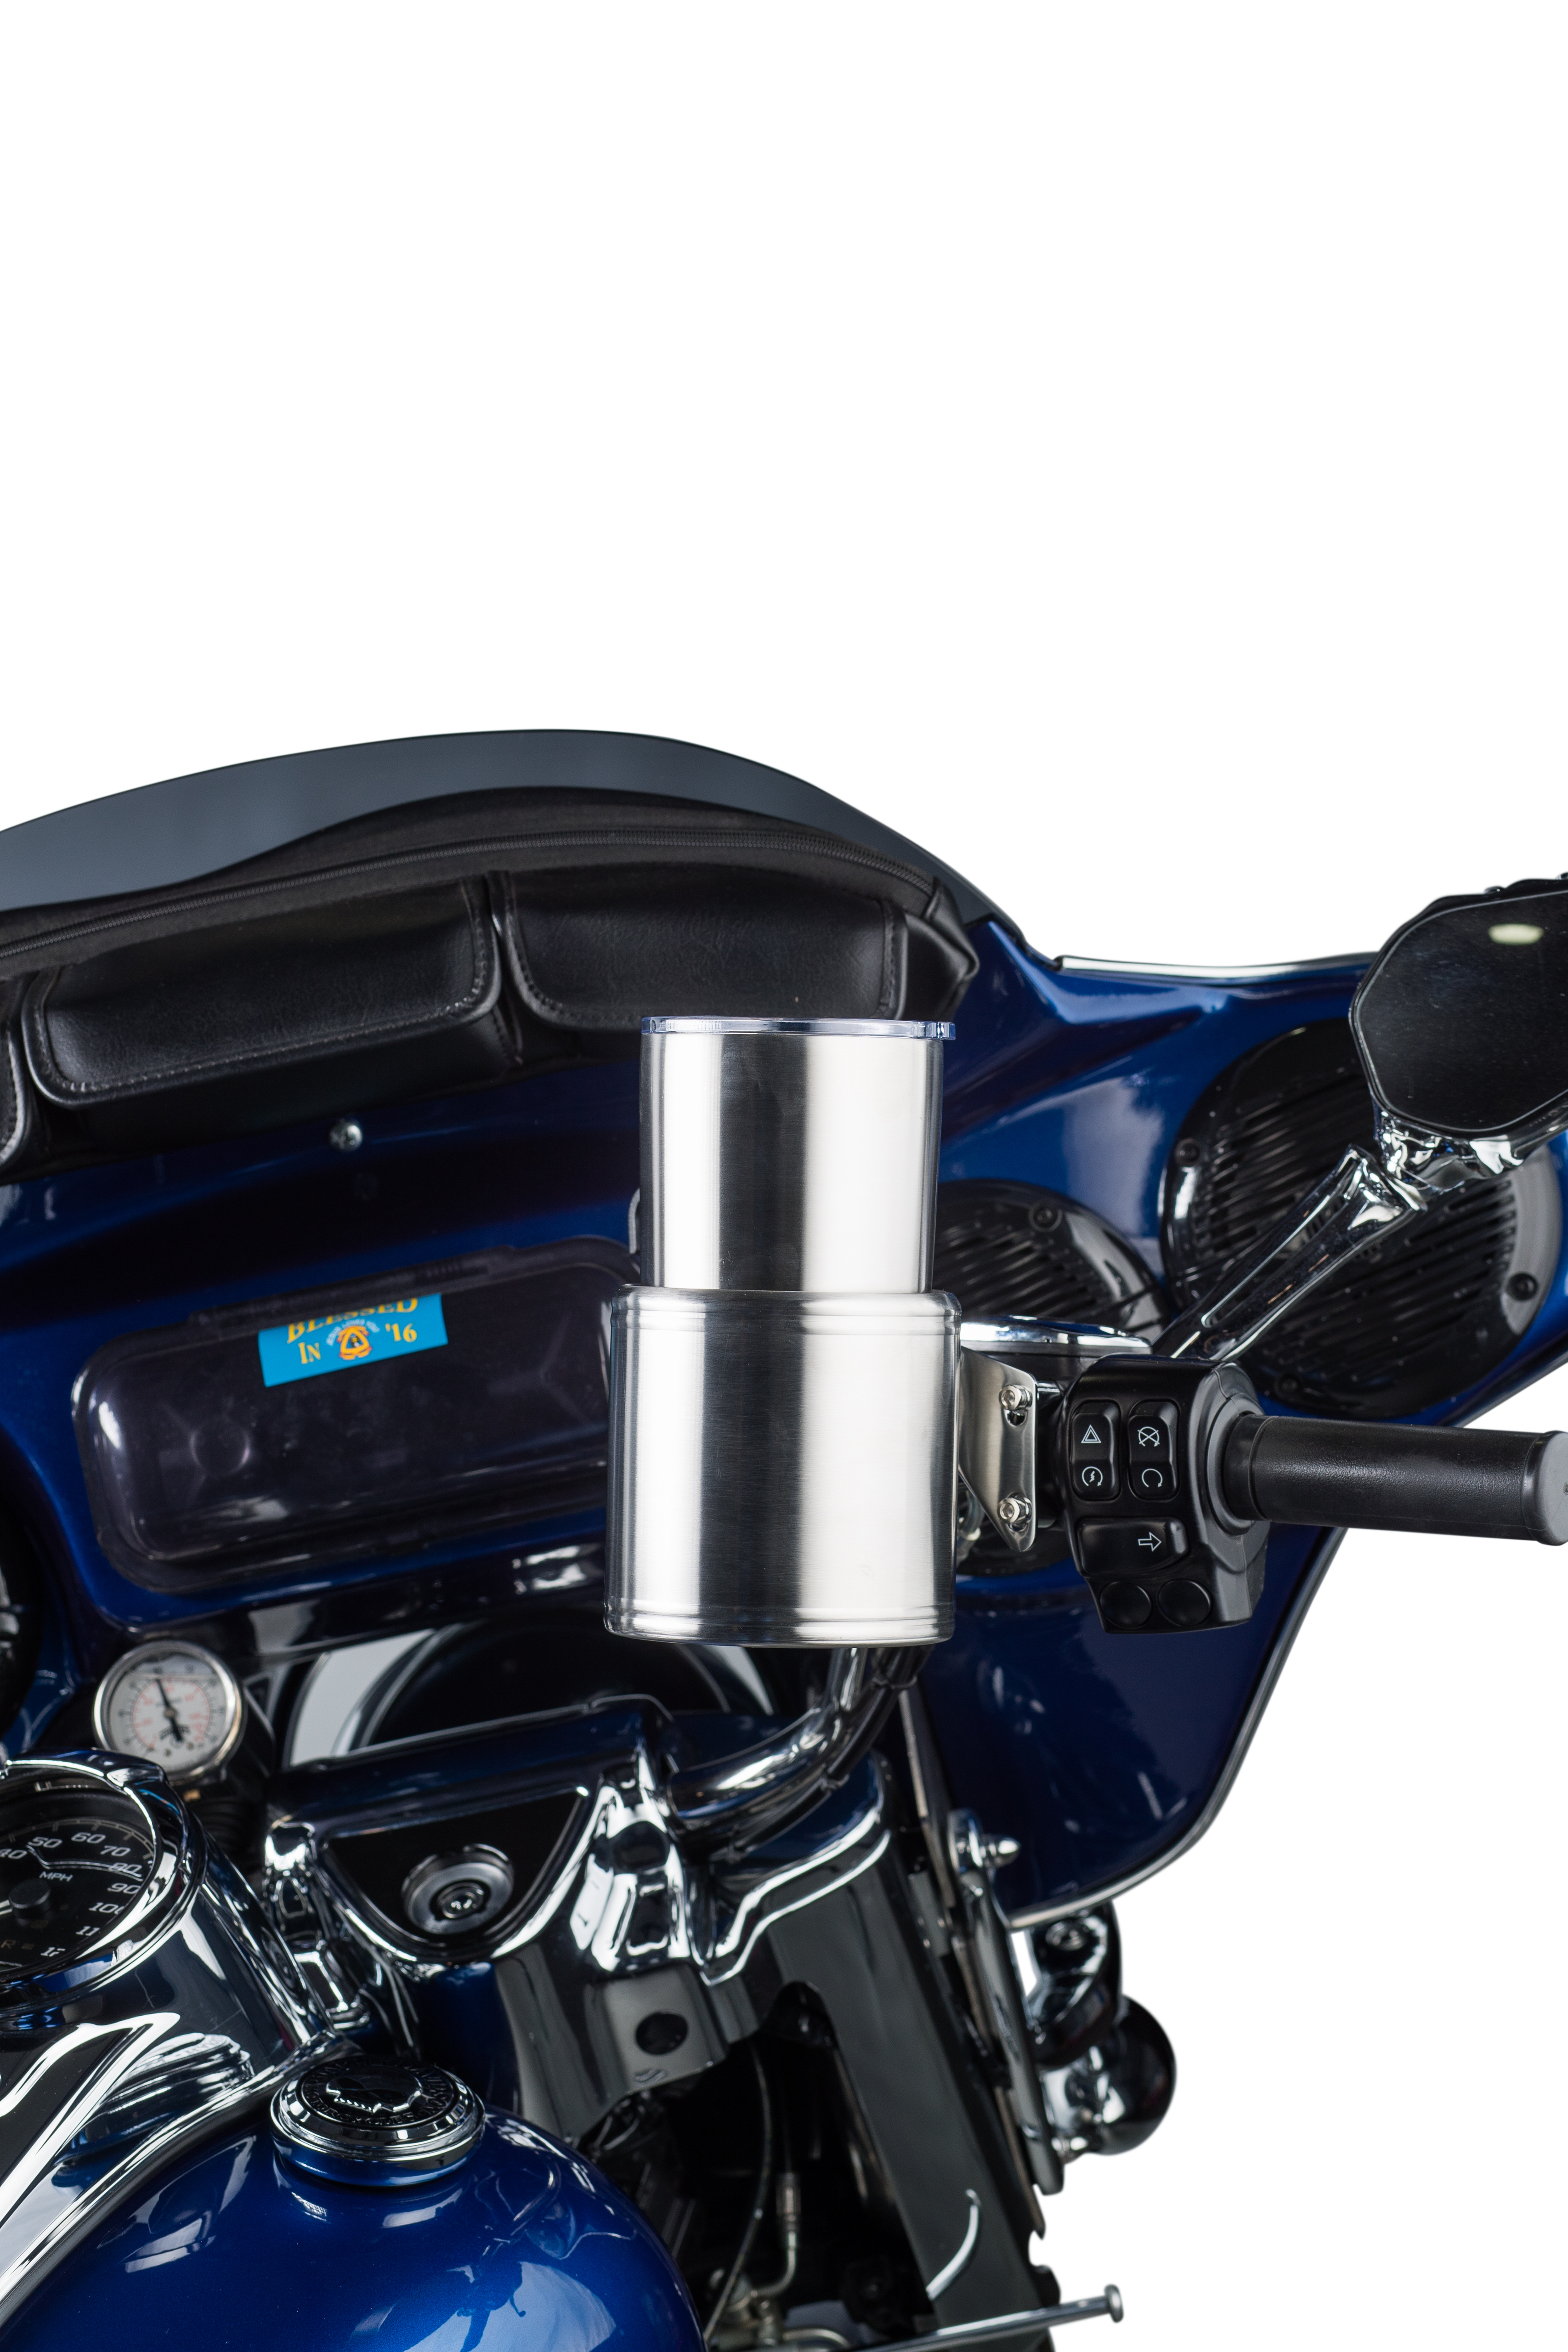 Kruzer Kaddy Black Leather Wrap Perch Mount Drink Holder - 600 Harley  Motorcycle Goldwing - Dennis Kirk